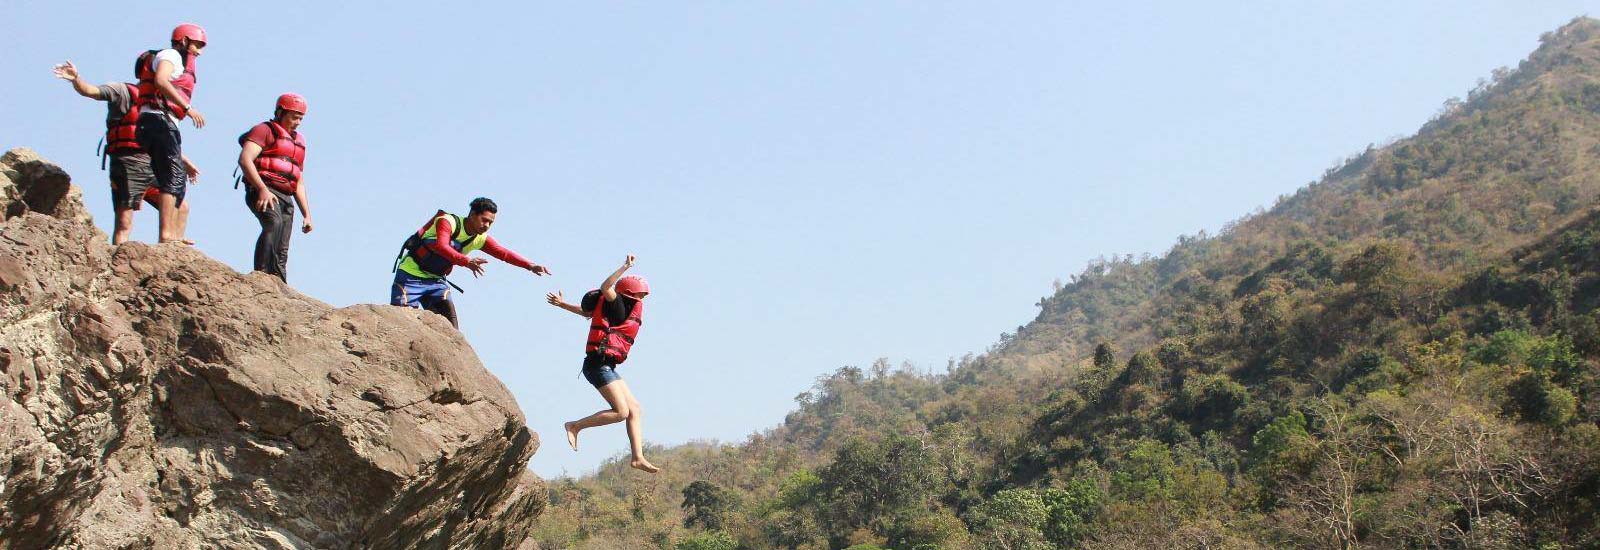 Cliff jumping in Rishikesh